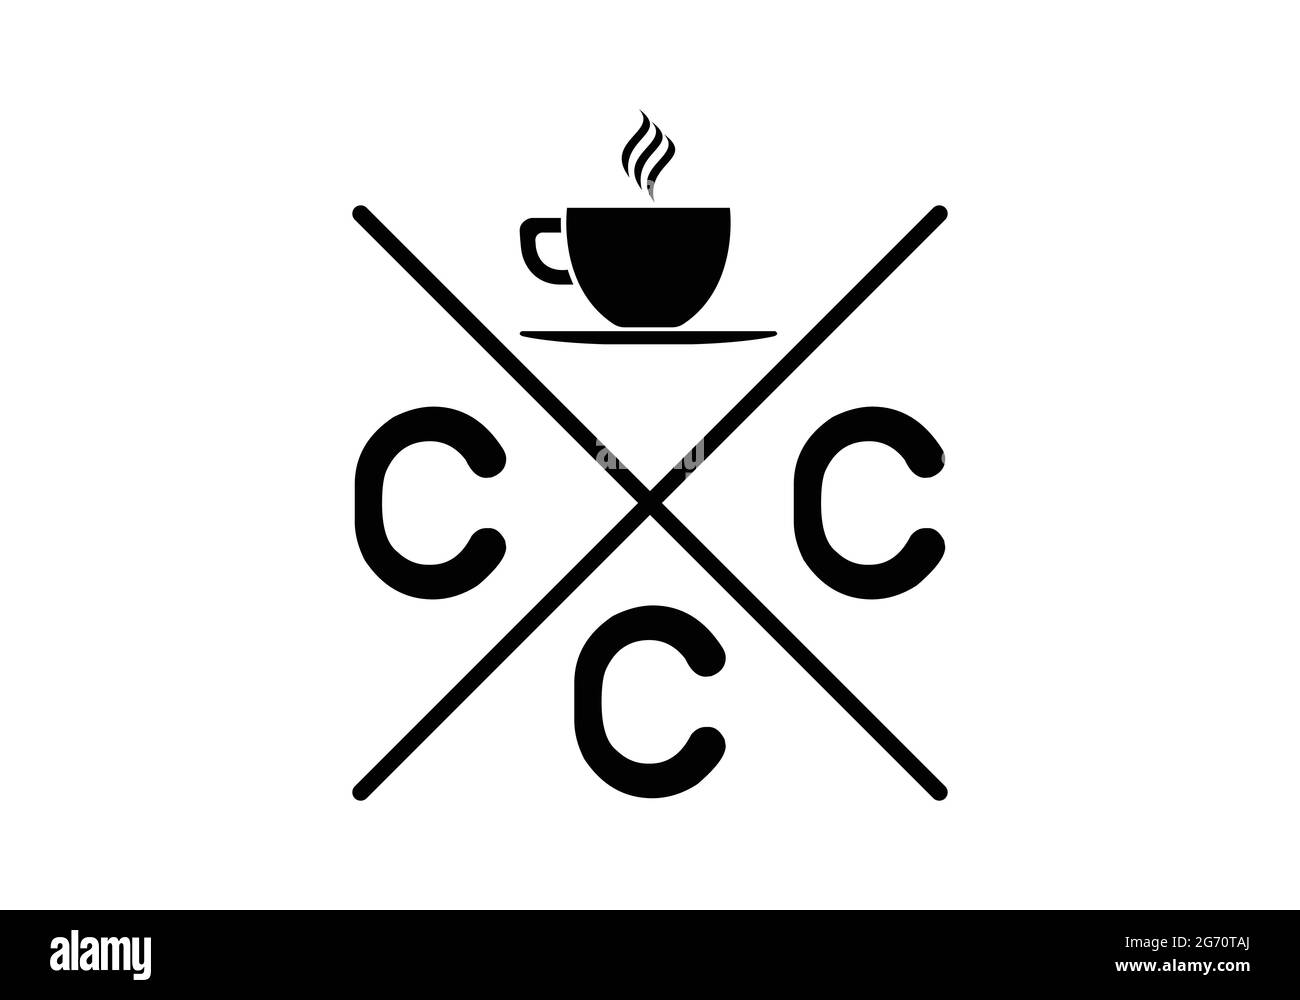 Initial Monogram Letter CCC Logo Design Vector Template 3C Vintage Coffee Cup Letter Logo Design CCC Coffee Shop Logo Design Stock Vector